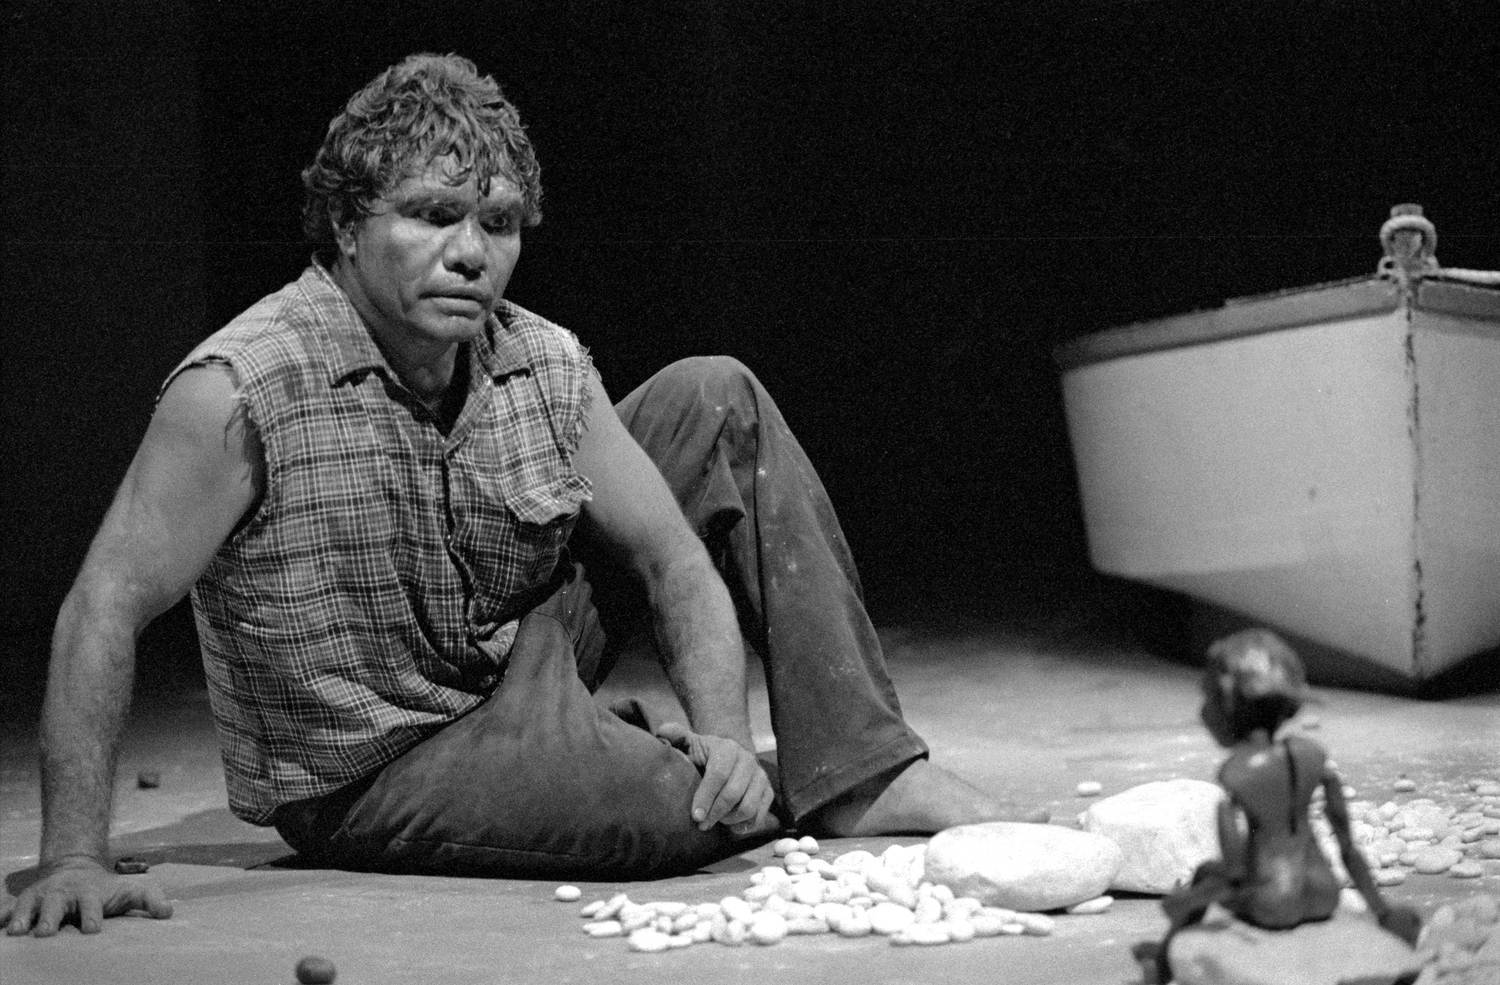 Lift Em Up Socks Handspan Theatre Aboriginal man sitting on floor conversing with puppet boy, black and white